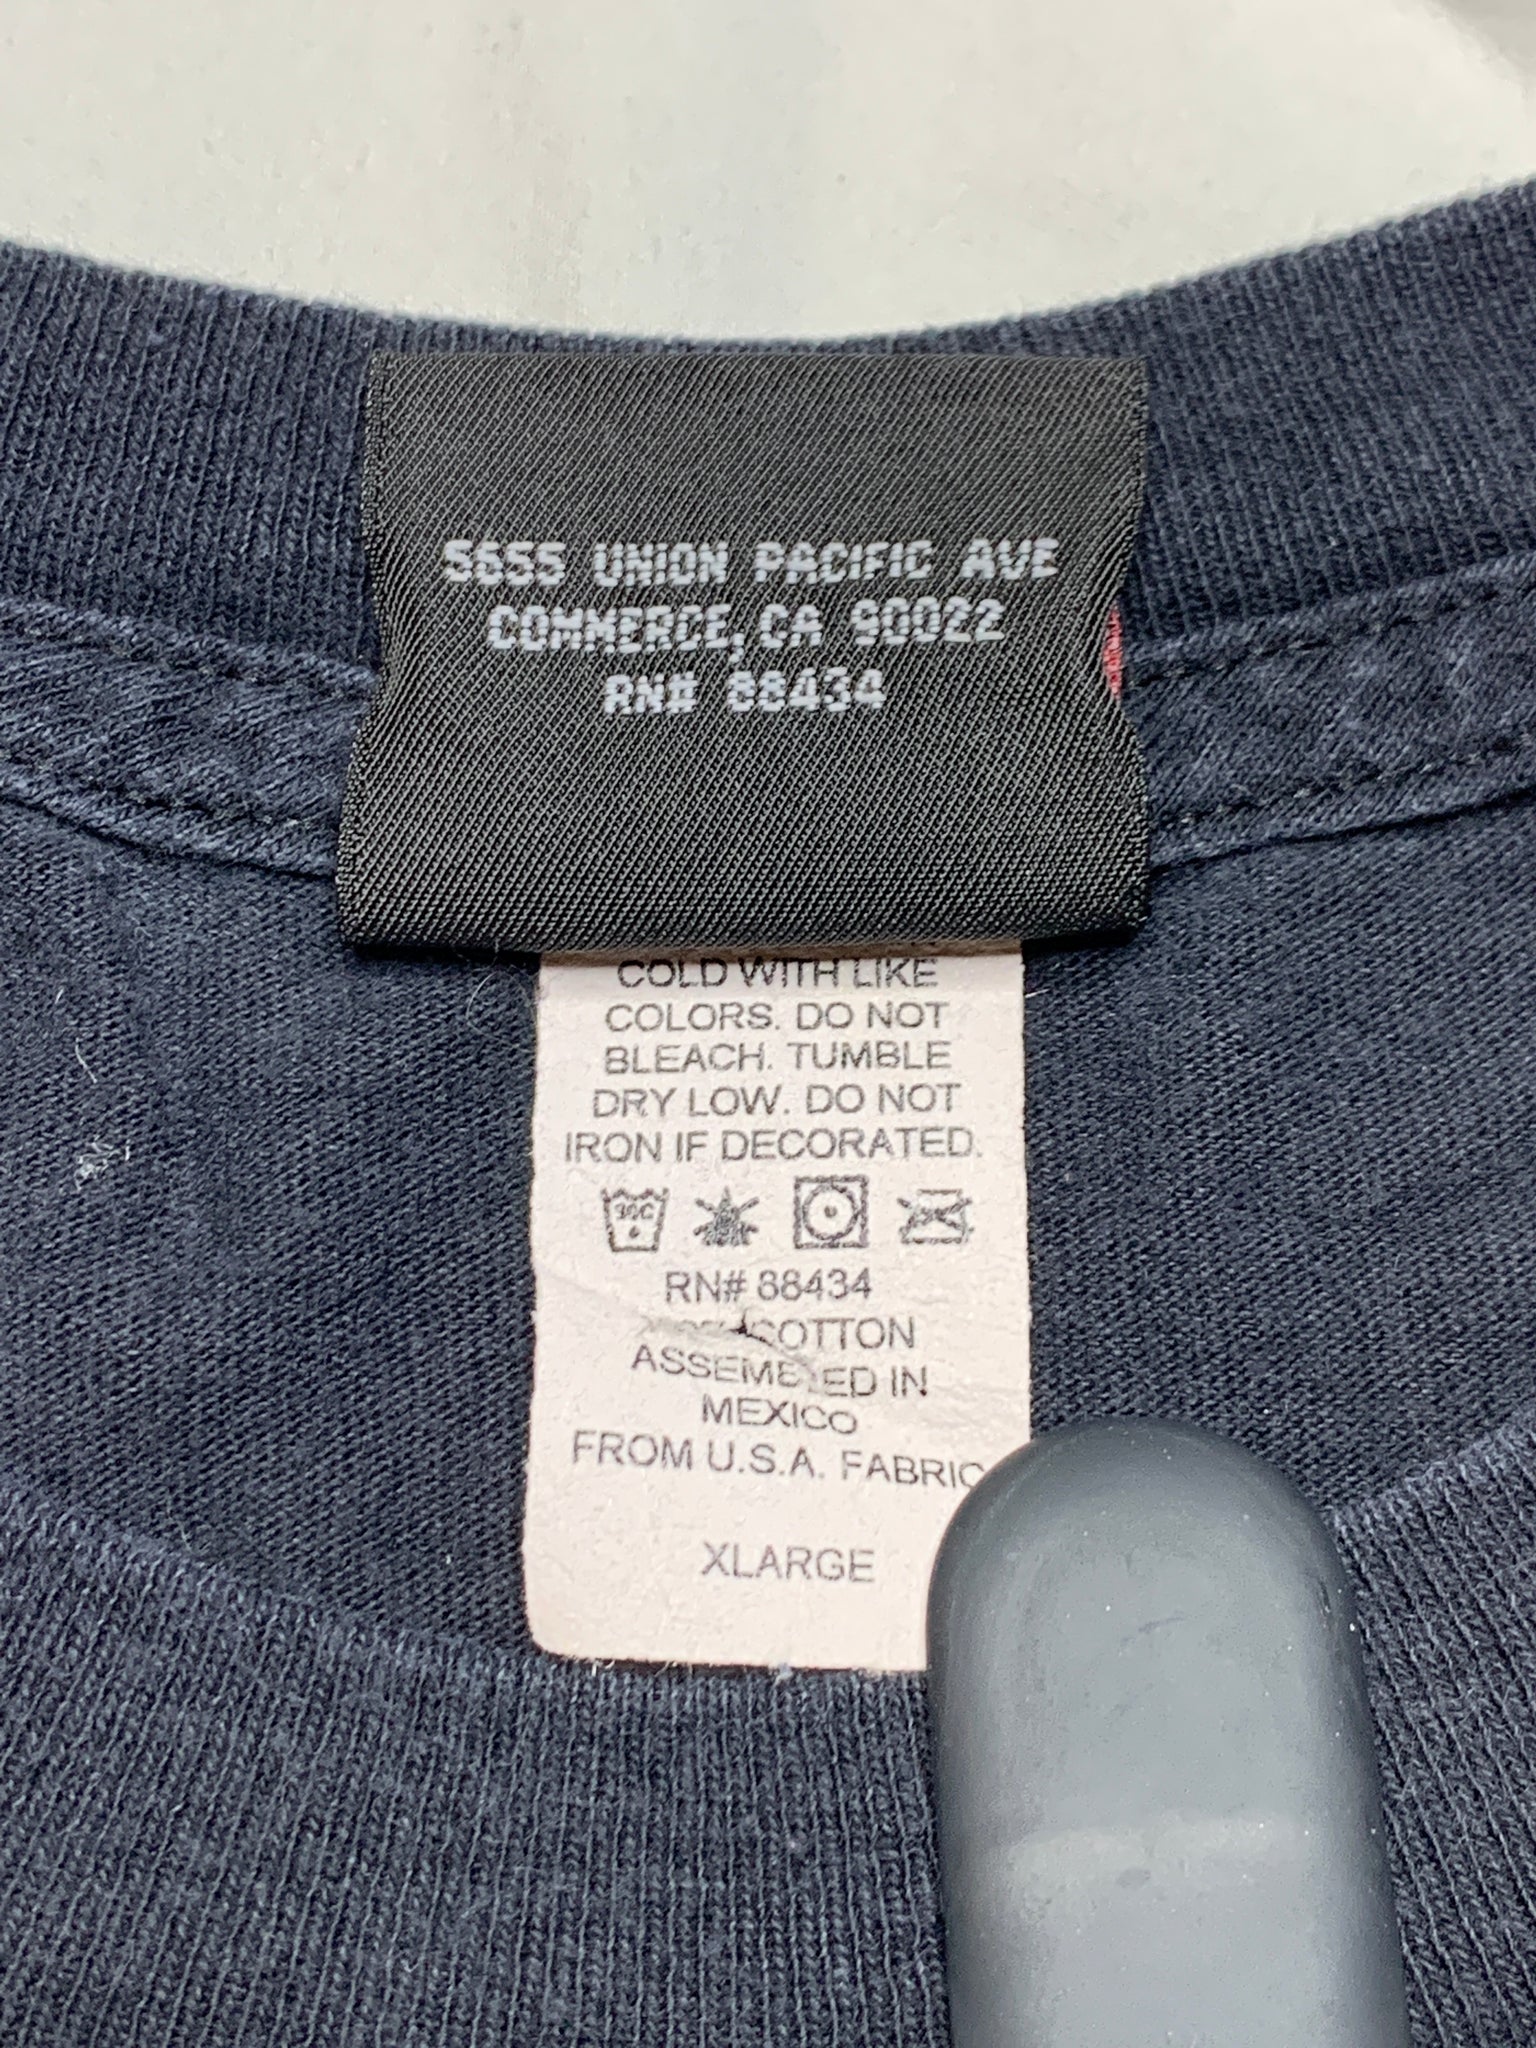 Rage Against The Machine Che Guevara Shirt - High-Quality Printed Brand